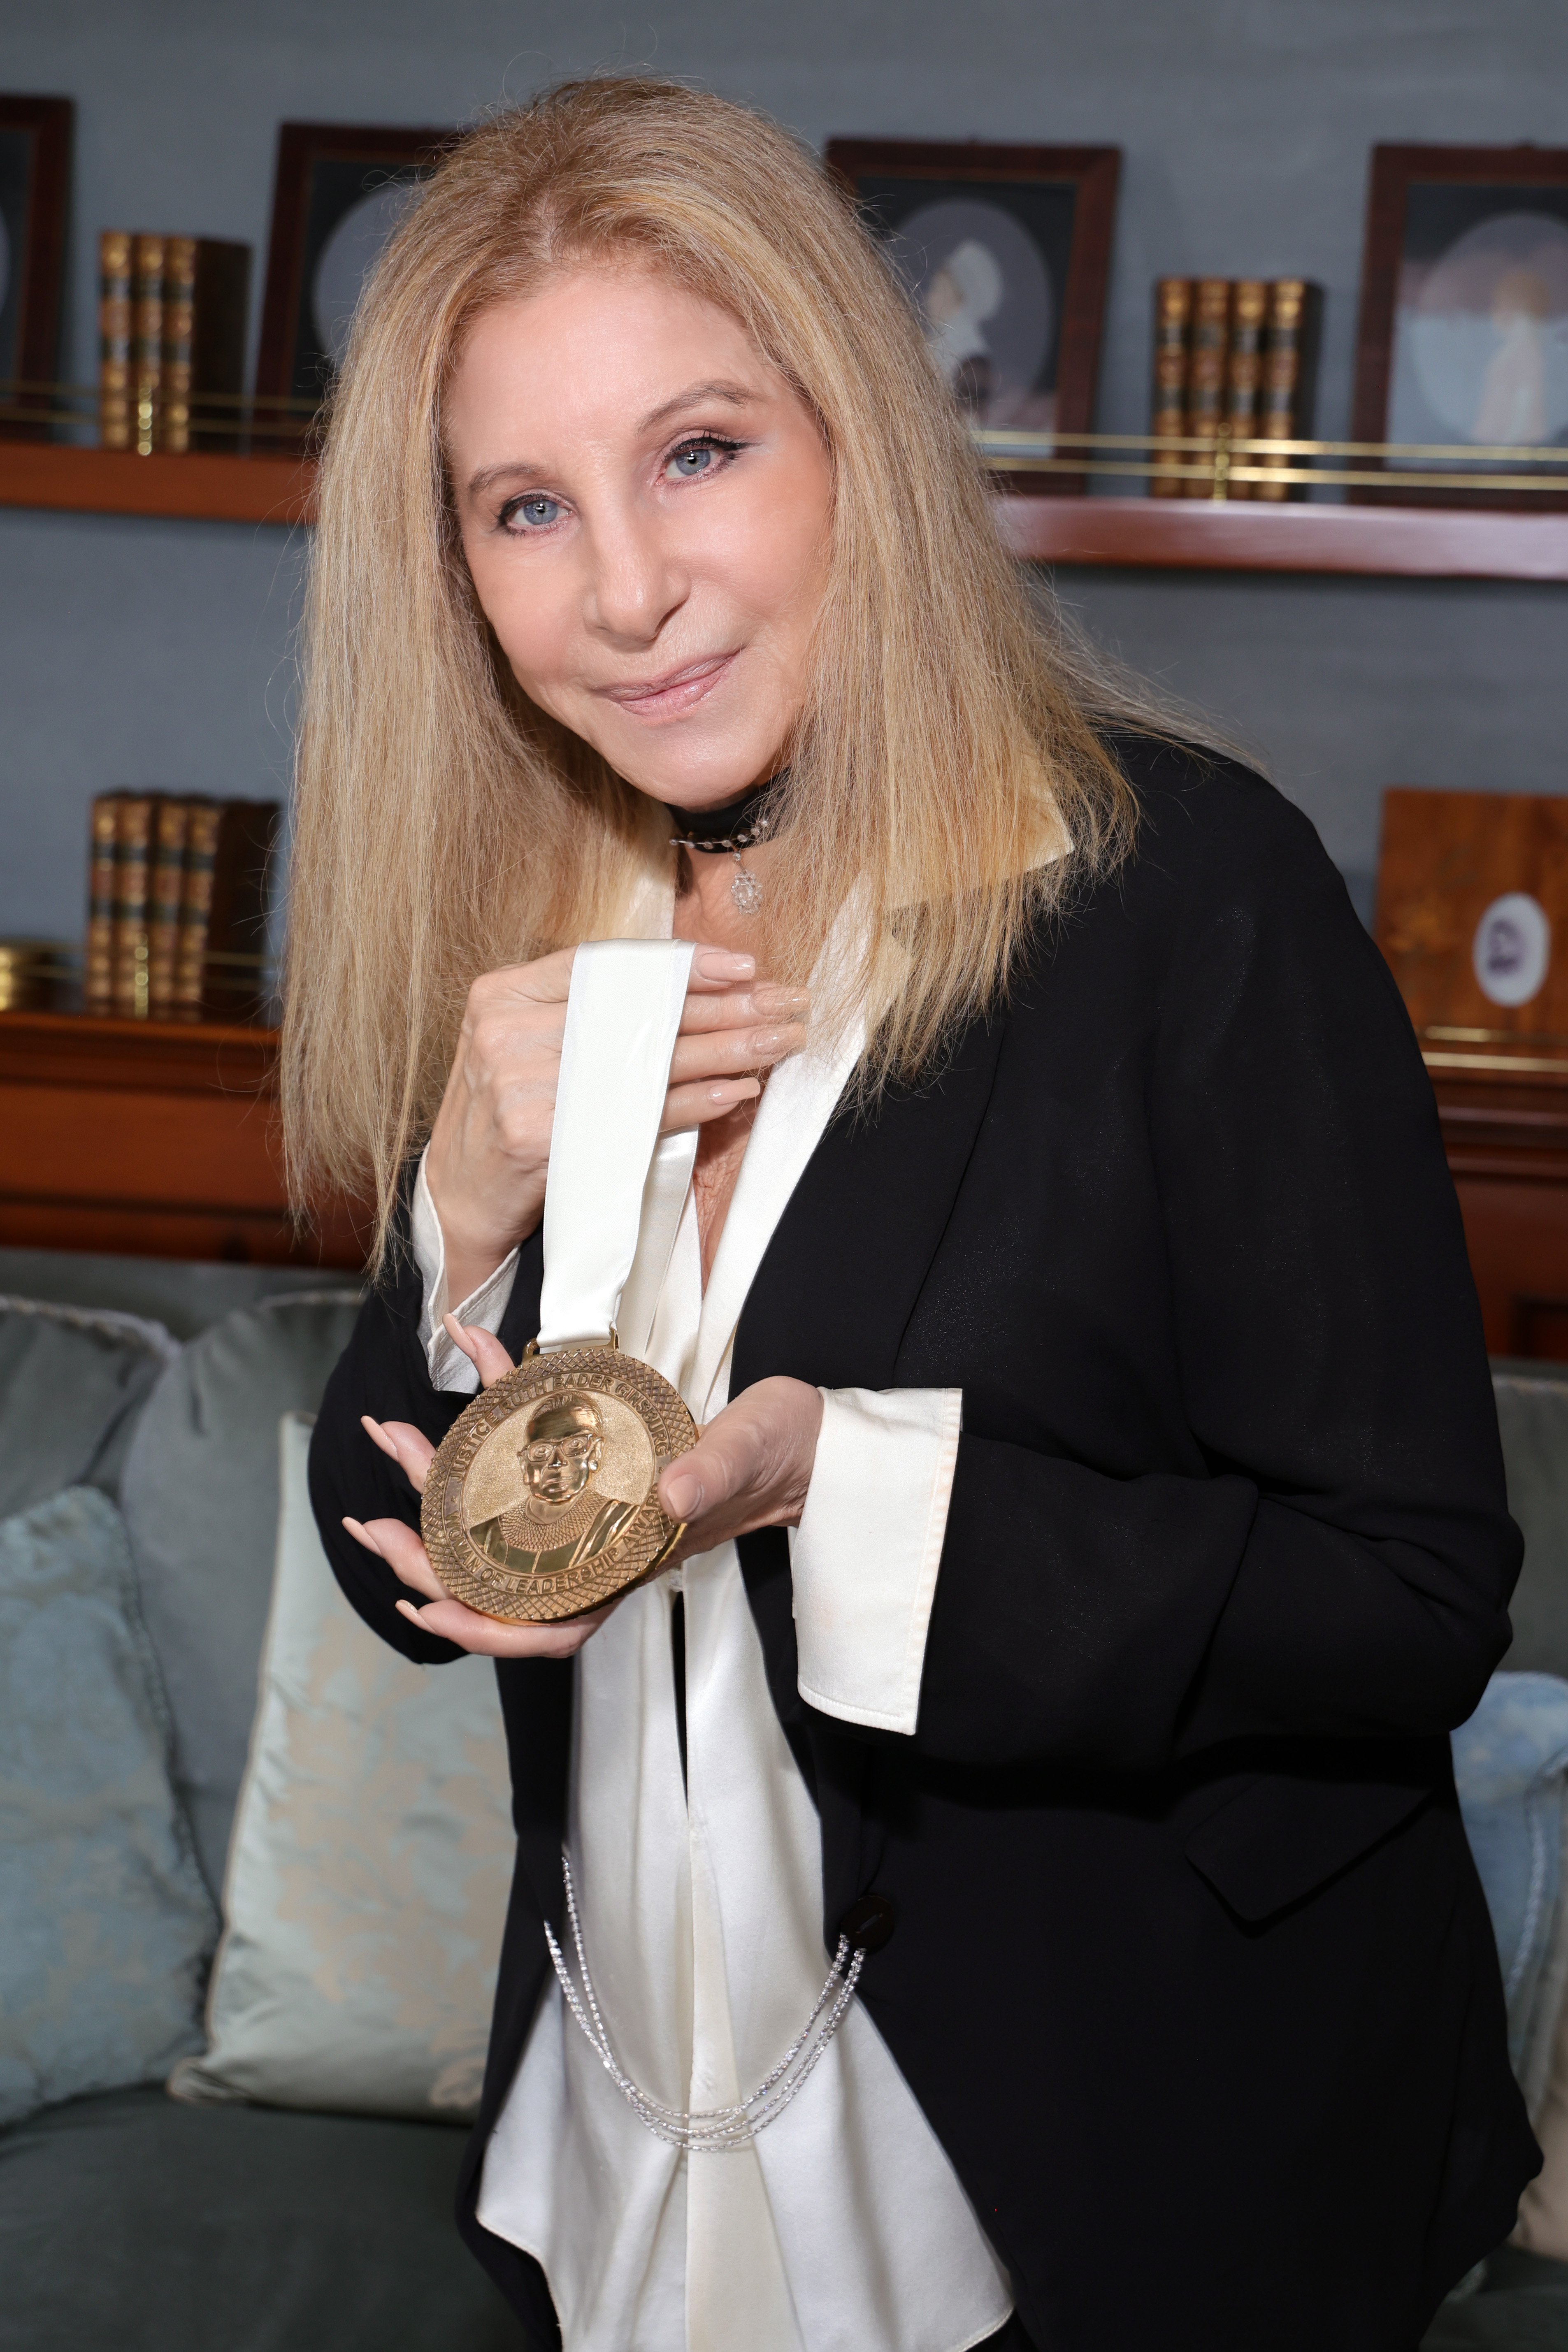 Barbra Streisand reçoit le prix The Justice Ruth Bader Ginsburg Woman of Leadership à Malibu, en Californie, le 1er juillet 2023. | Source : Getty Images